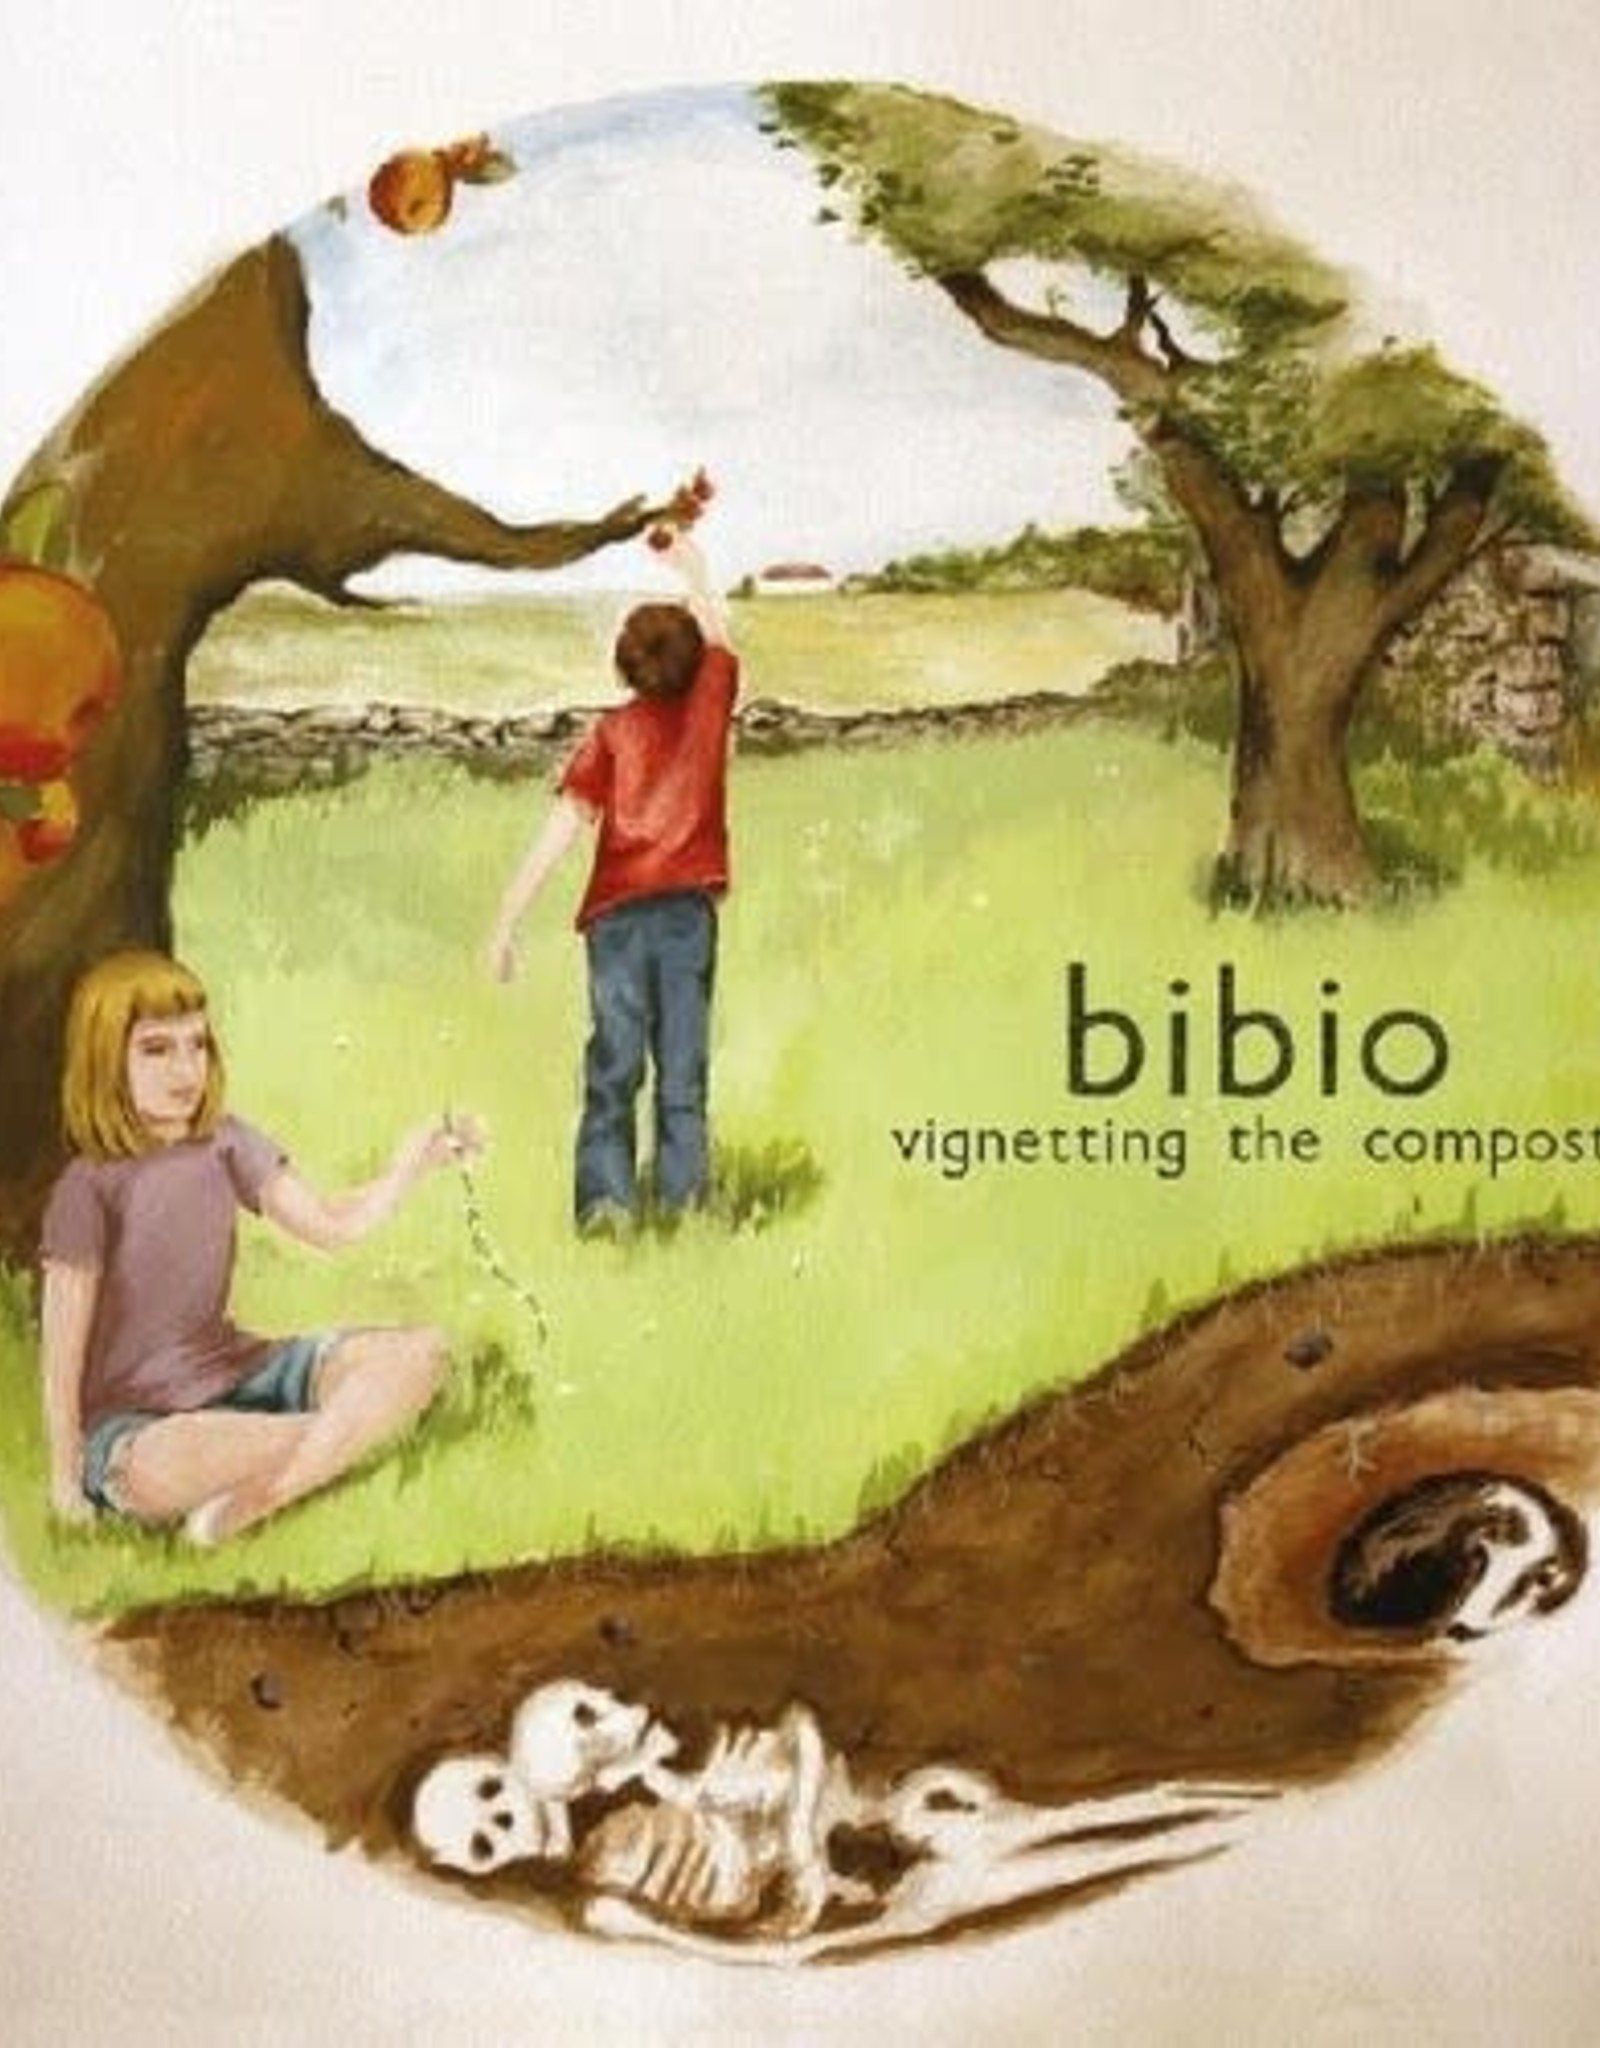 Bibio - Vignetting the Compost